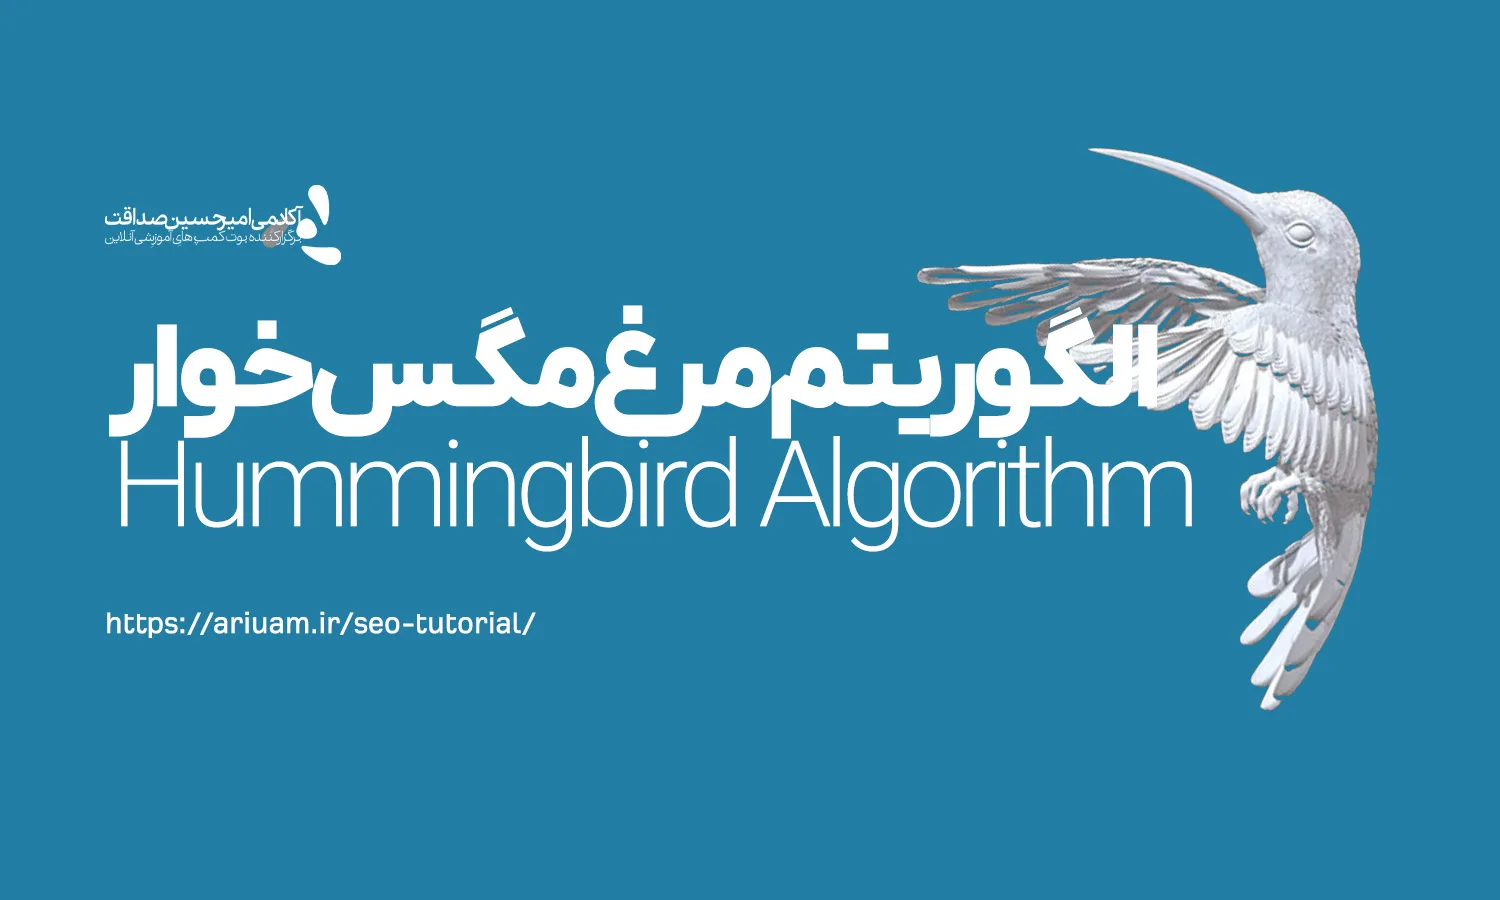 الگوریتم مرغ مگس‌خوار (Hummingbird Algorithm)